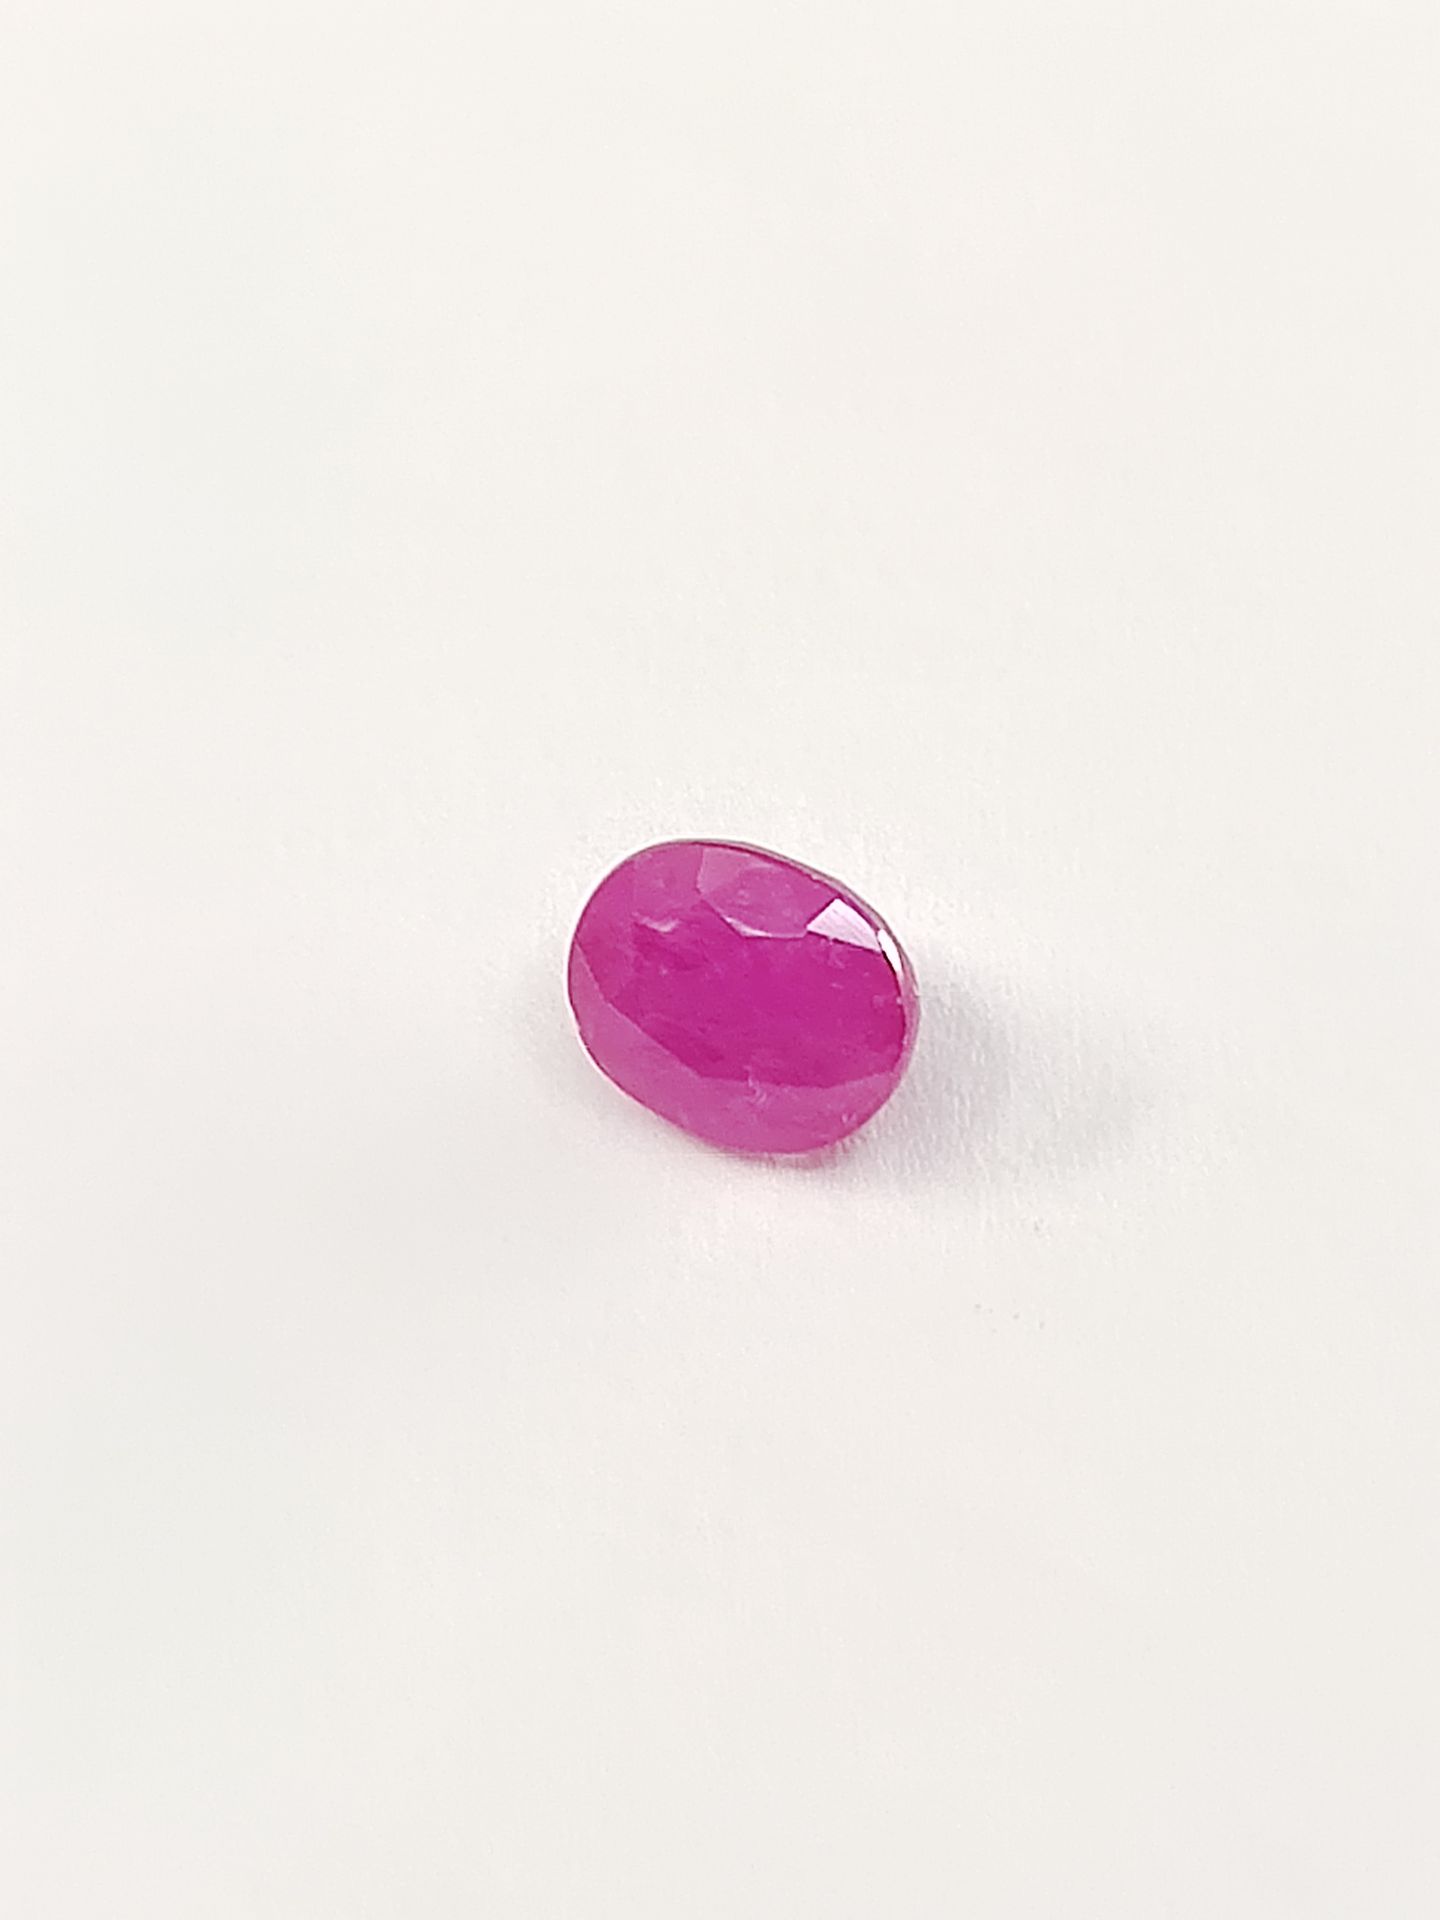 Null RUBIS pinkish rouge ovale, 	Madagascar	, 1.95 carats 


Dim : 	7 x 6